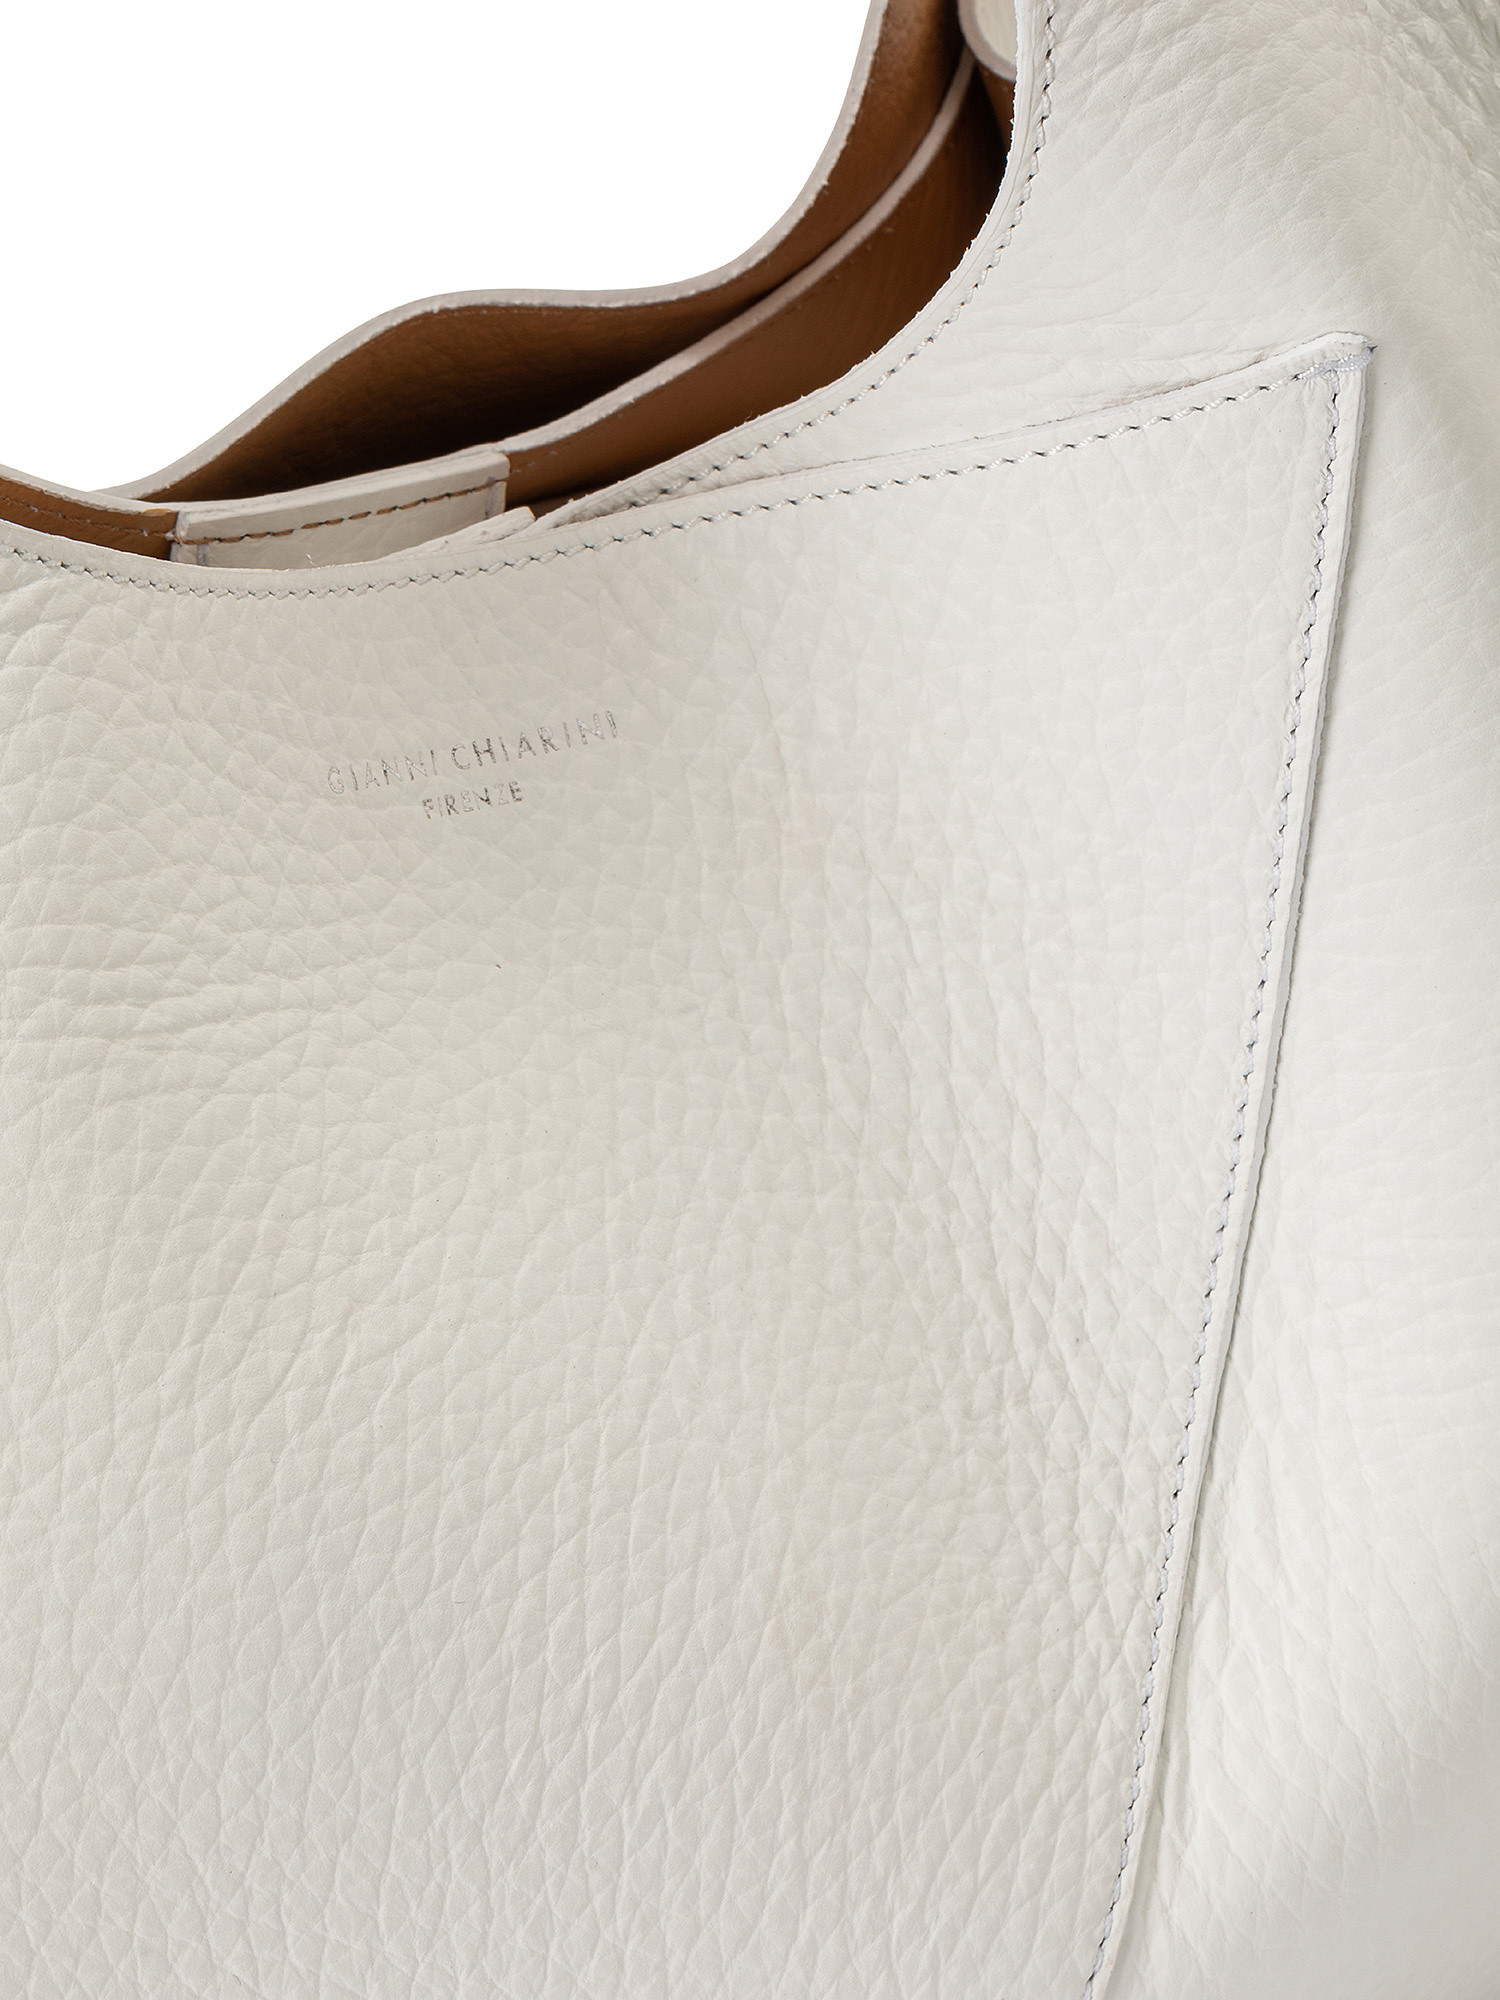 Euphoria leather bag, White, large image number 2